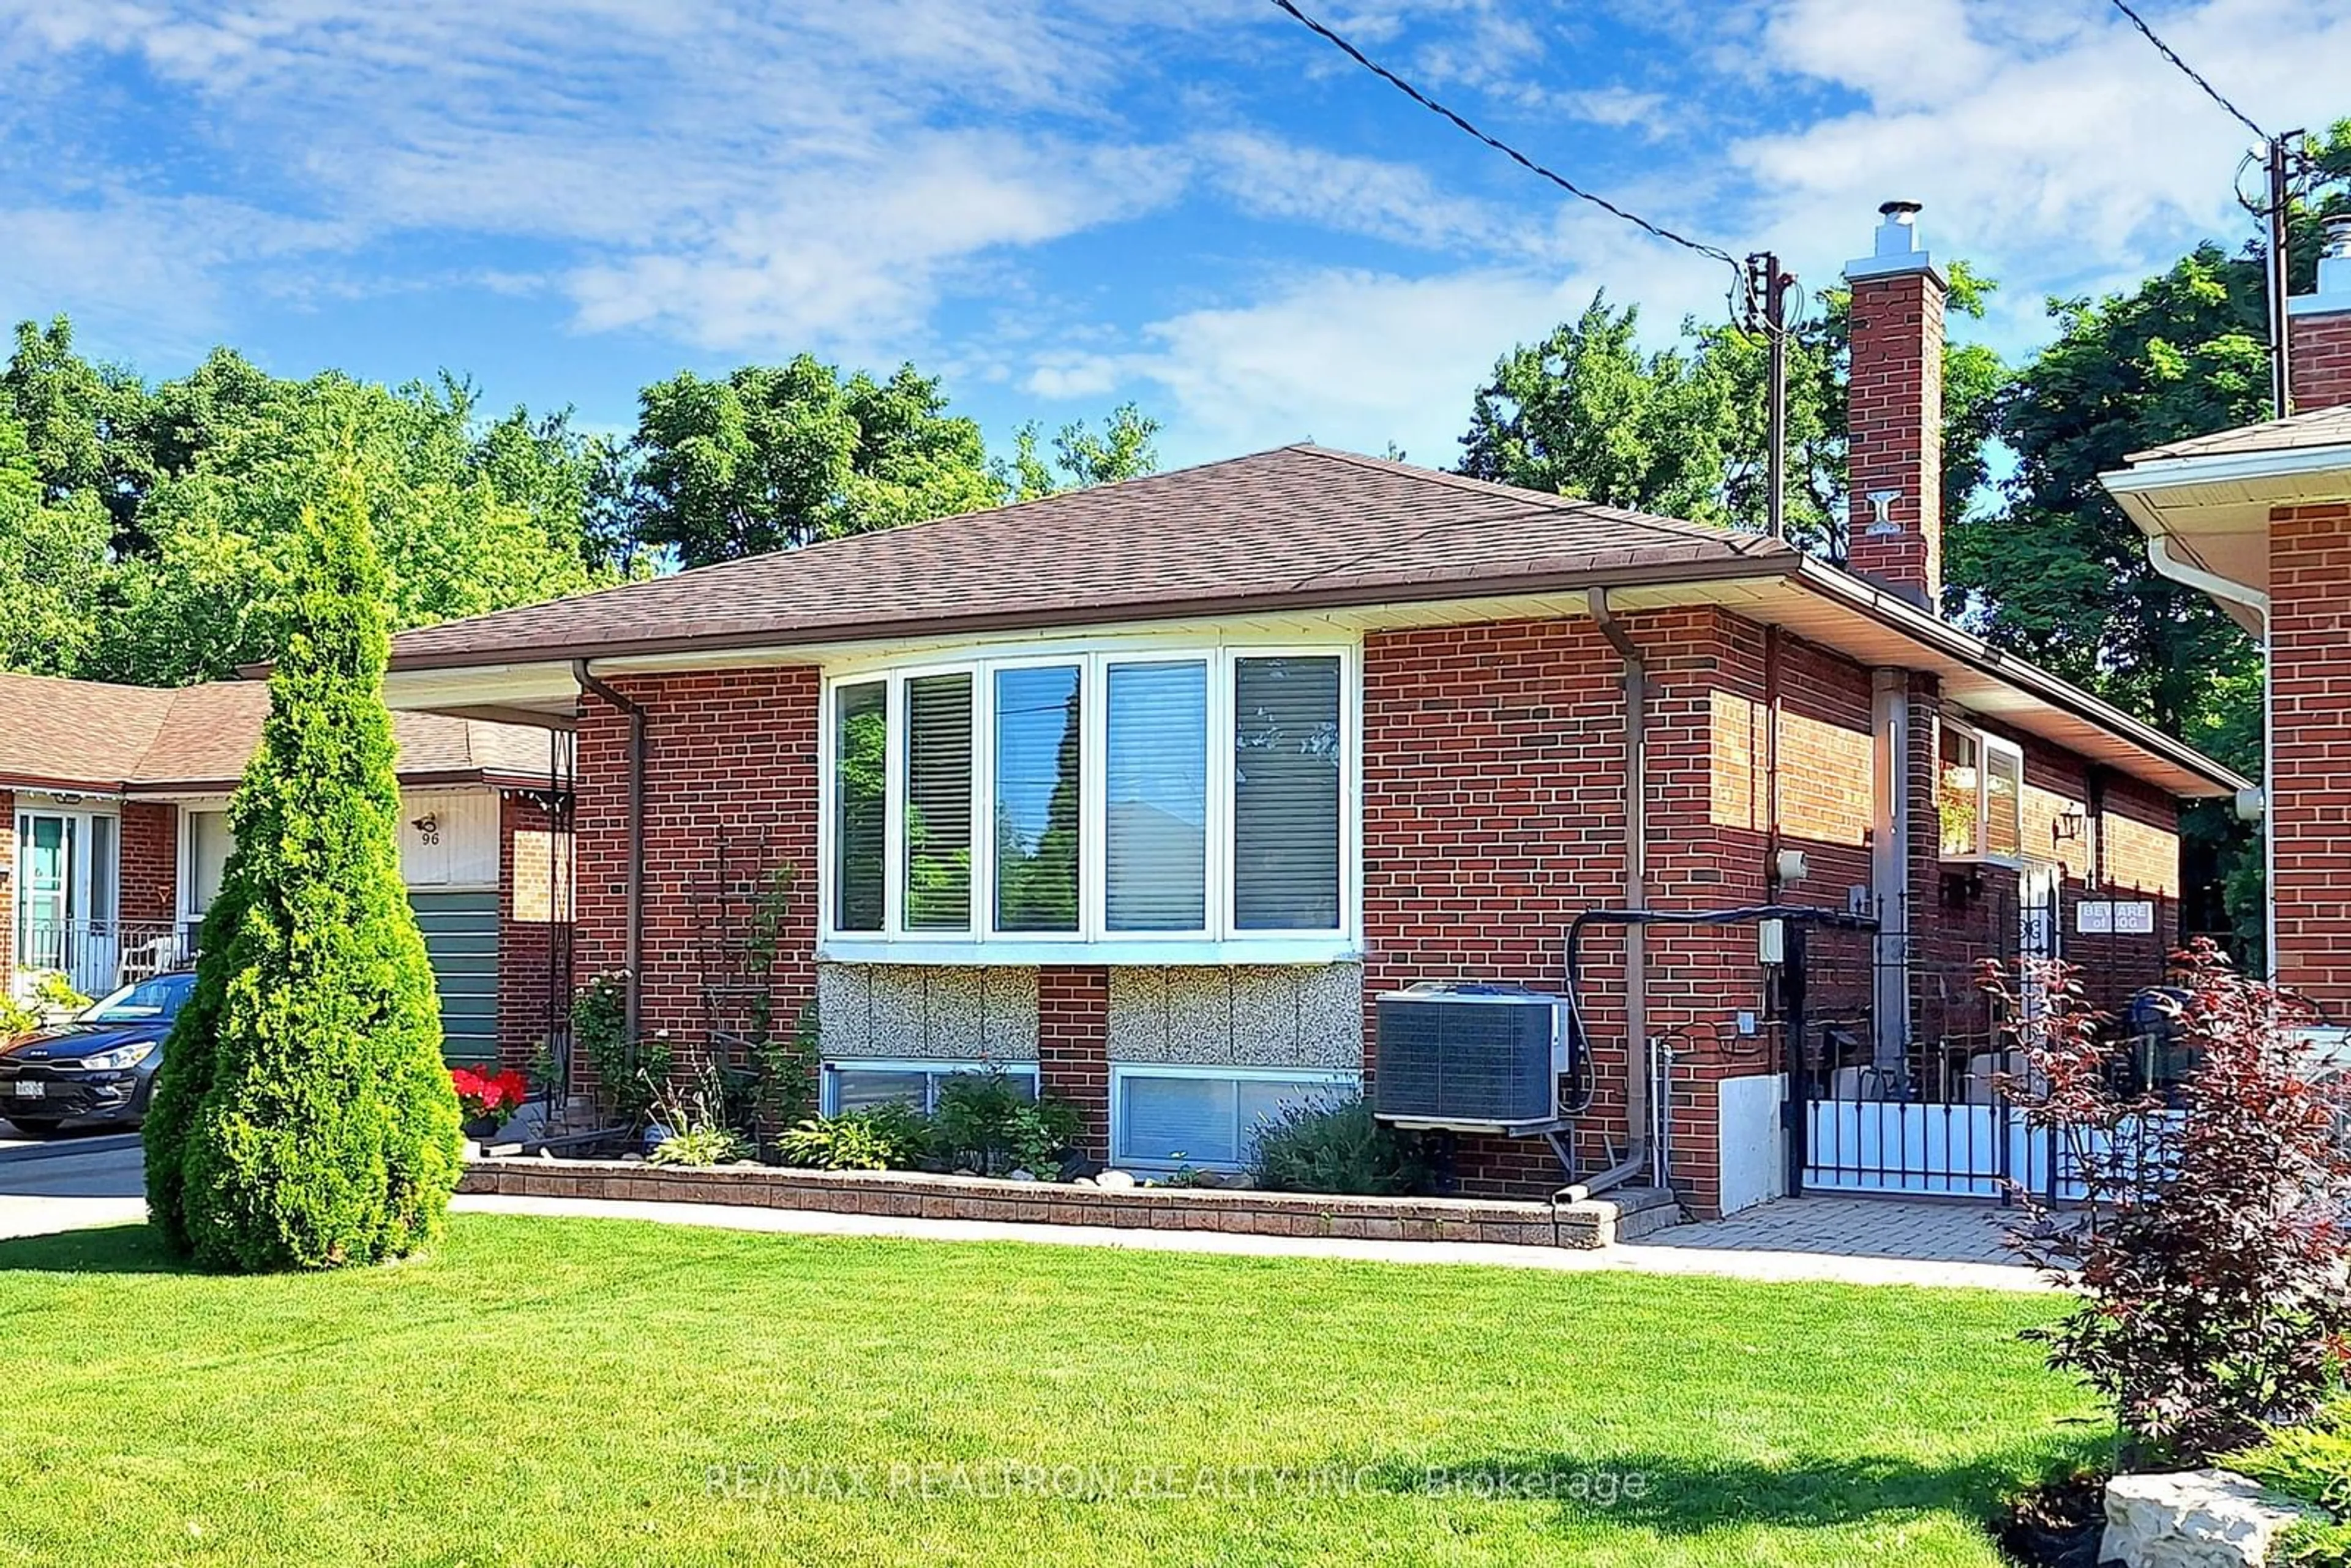 Home with brick exterior material for 94 Camborne Ave, Toronto Ontario M3M 2R4